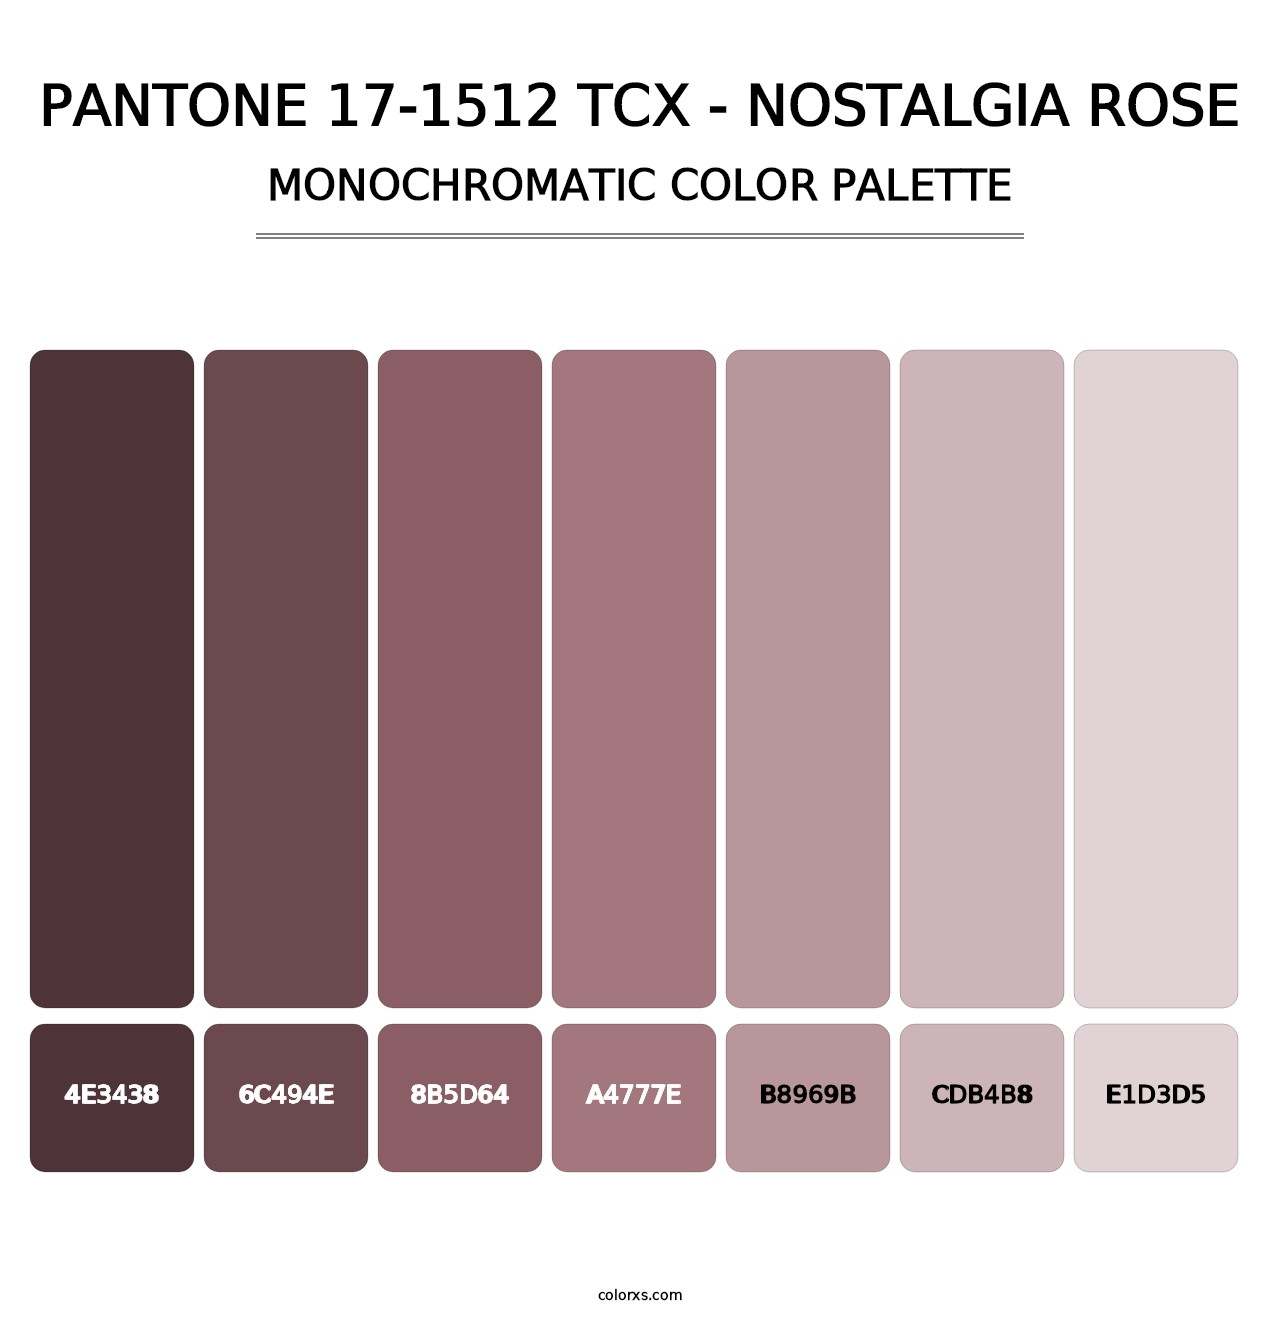 PANTONE 17-1512 TCX - Nostalgia Rose - Monochromatic Color Palette